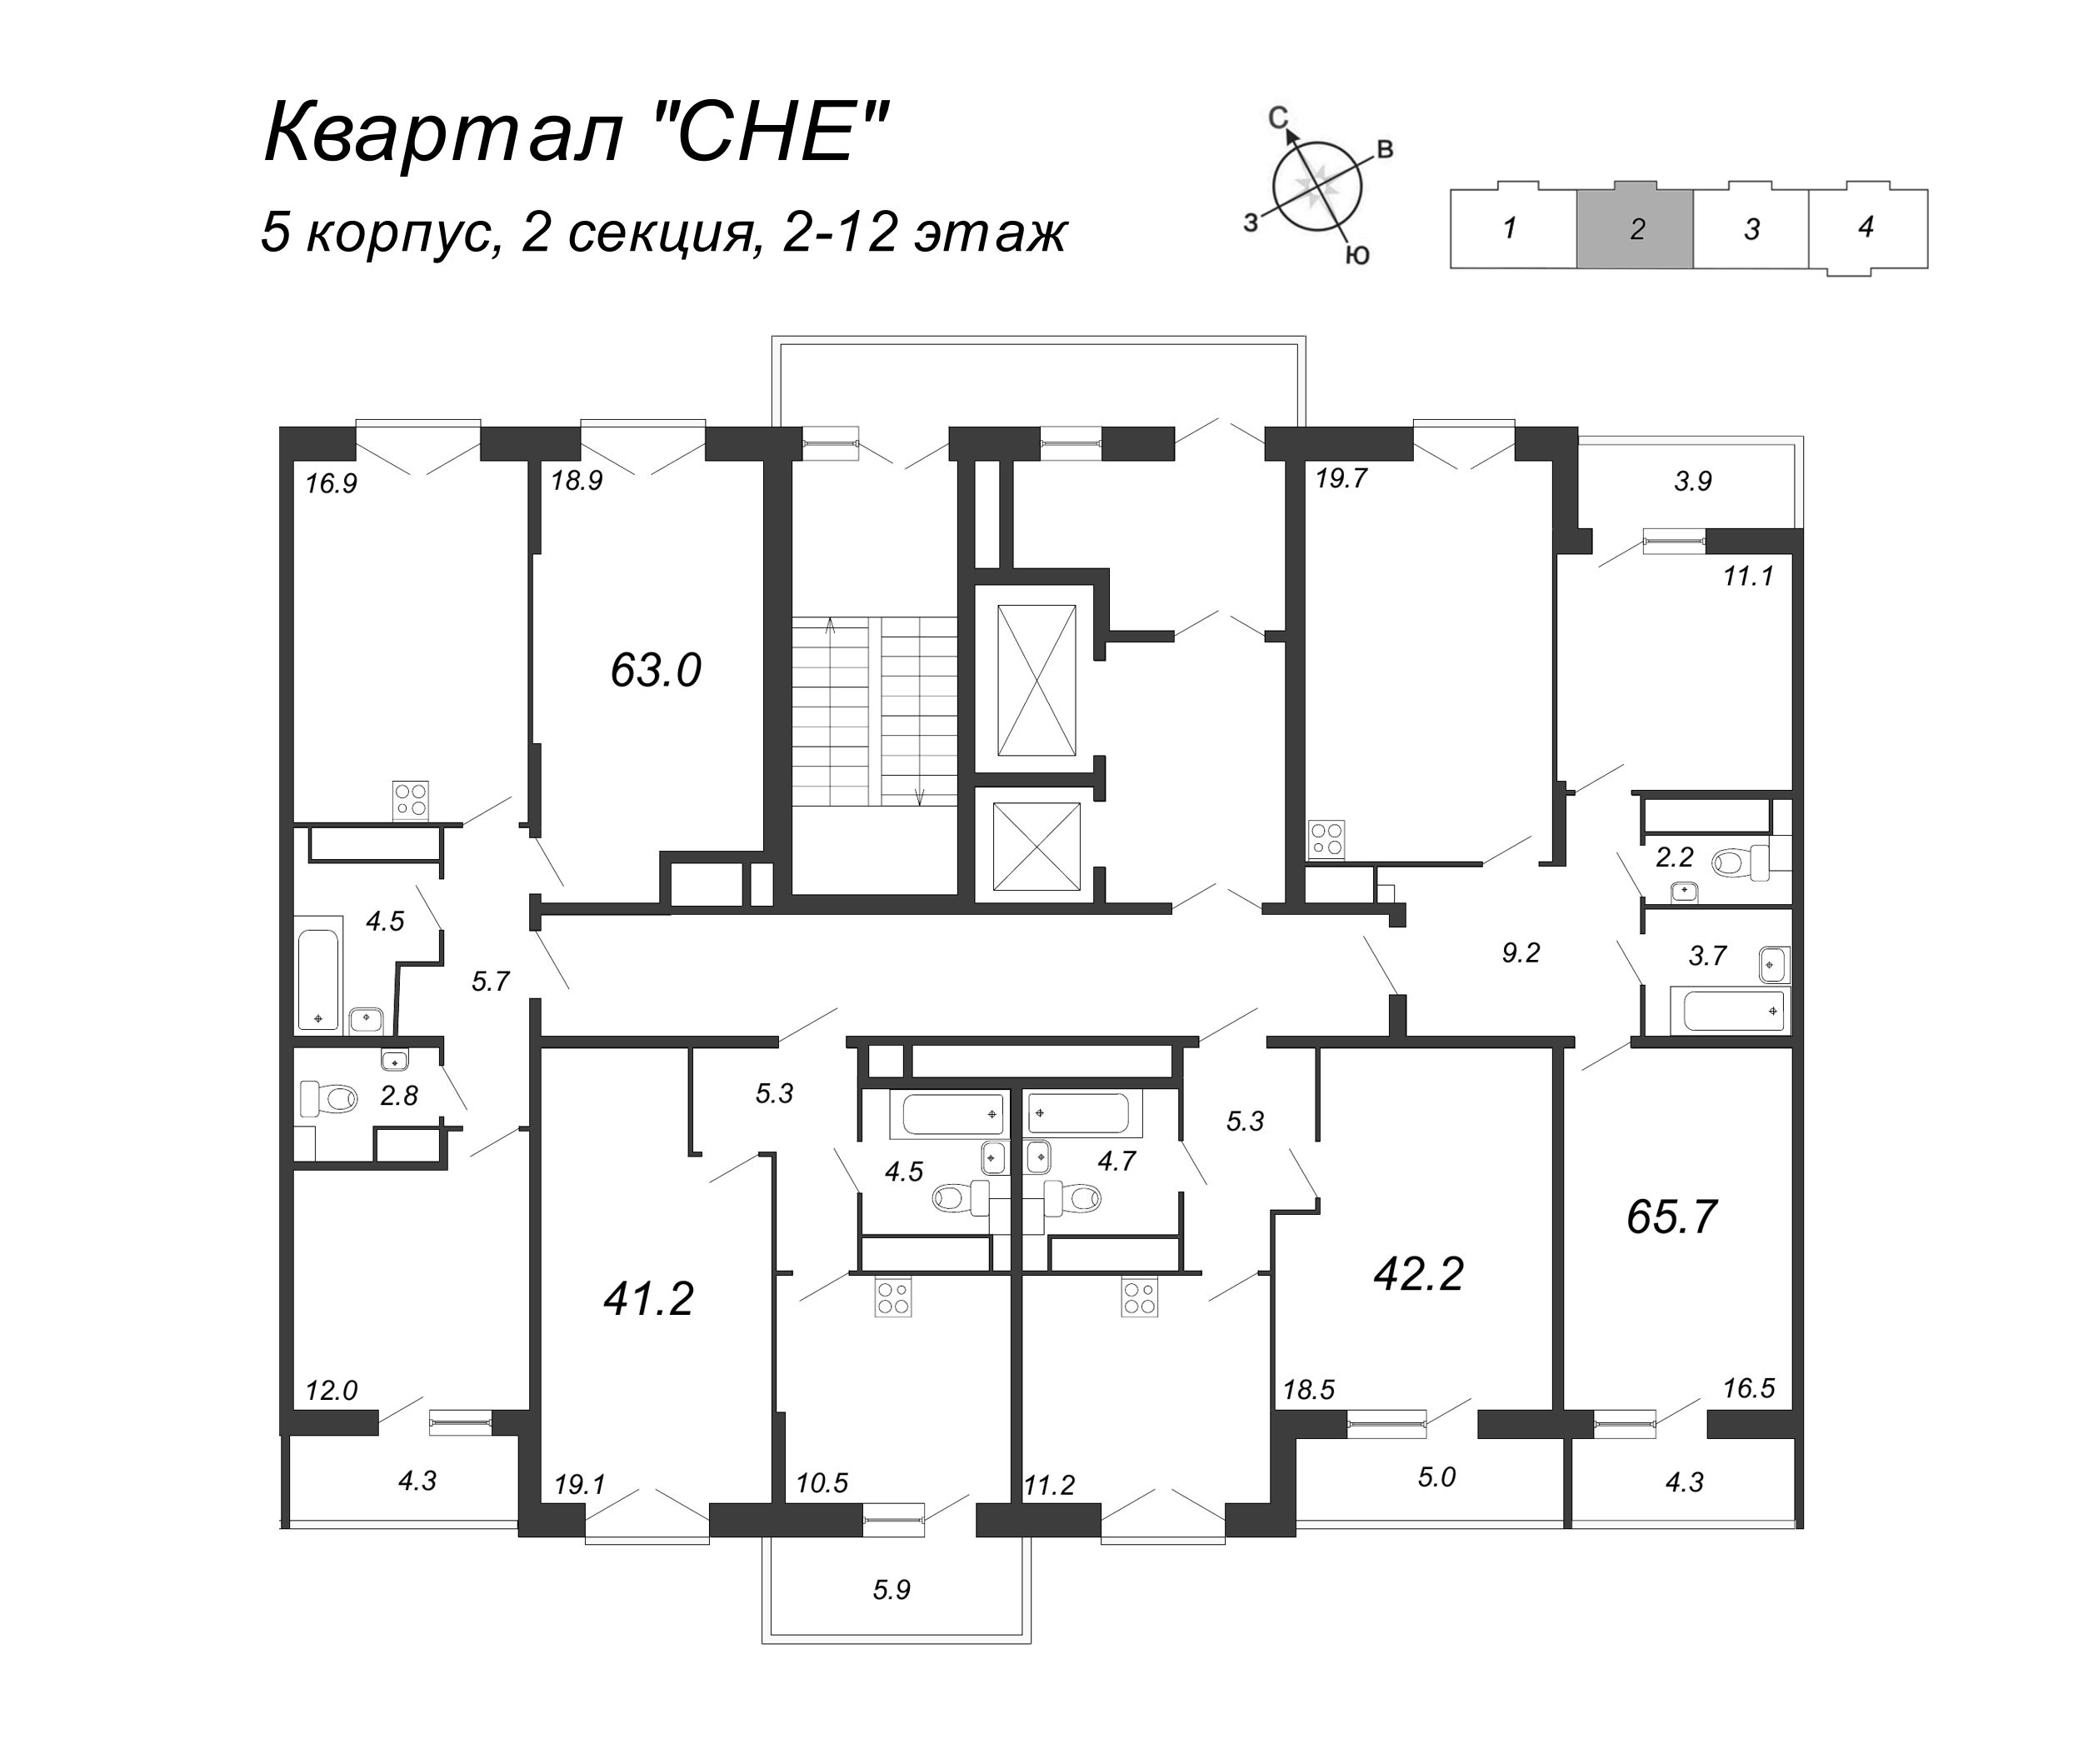 1-комнатная квартира, 42.3 м² в ЖК "Квартал Che" - планировка этажа